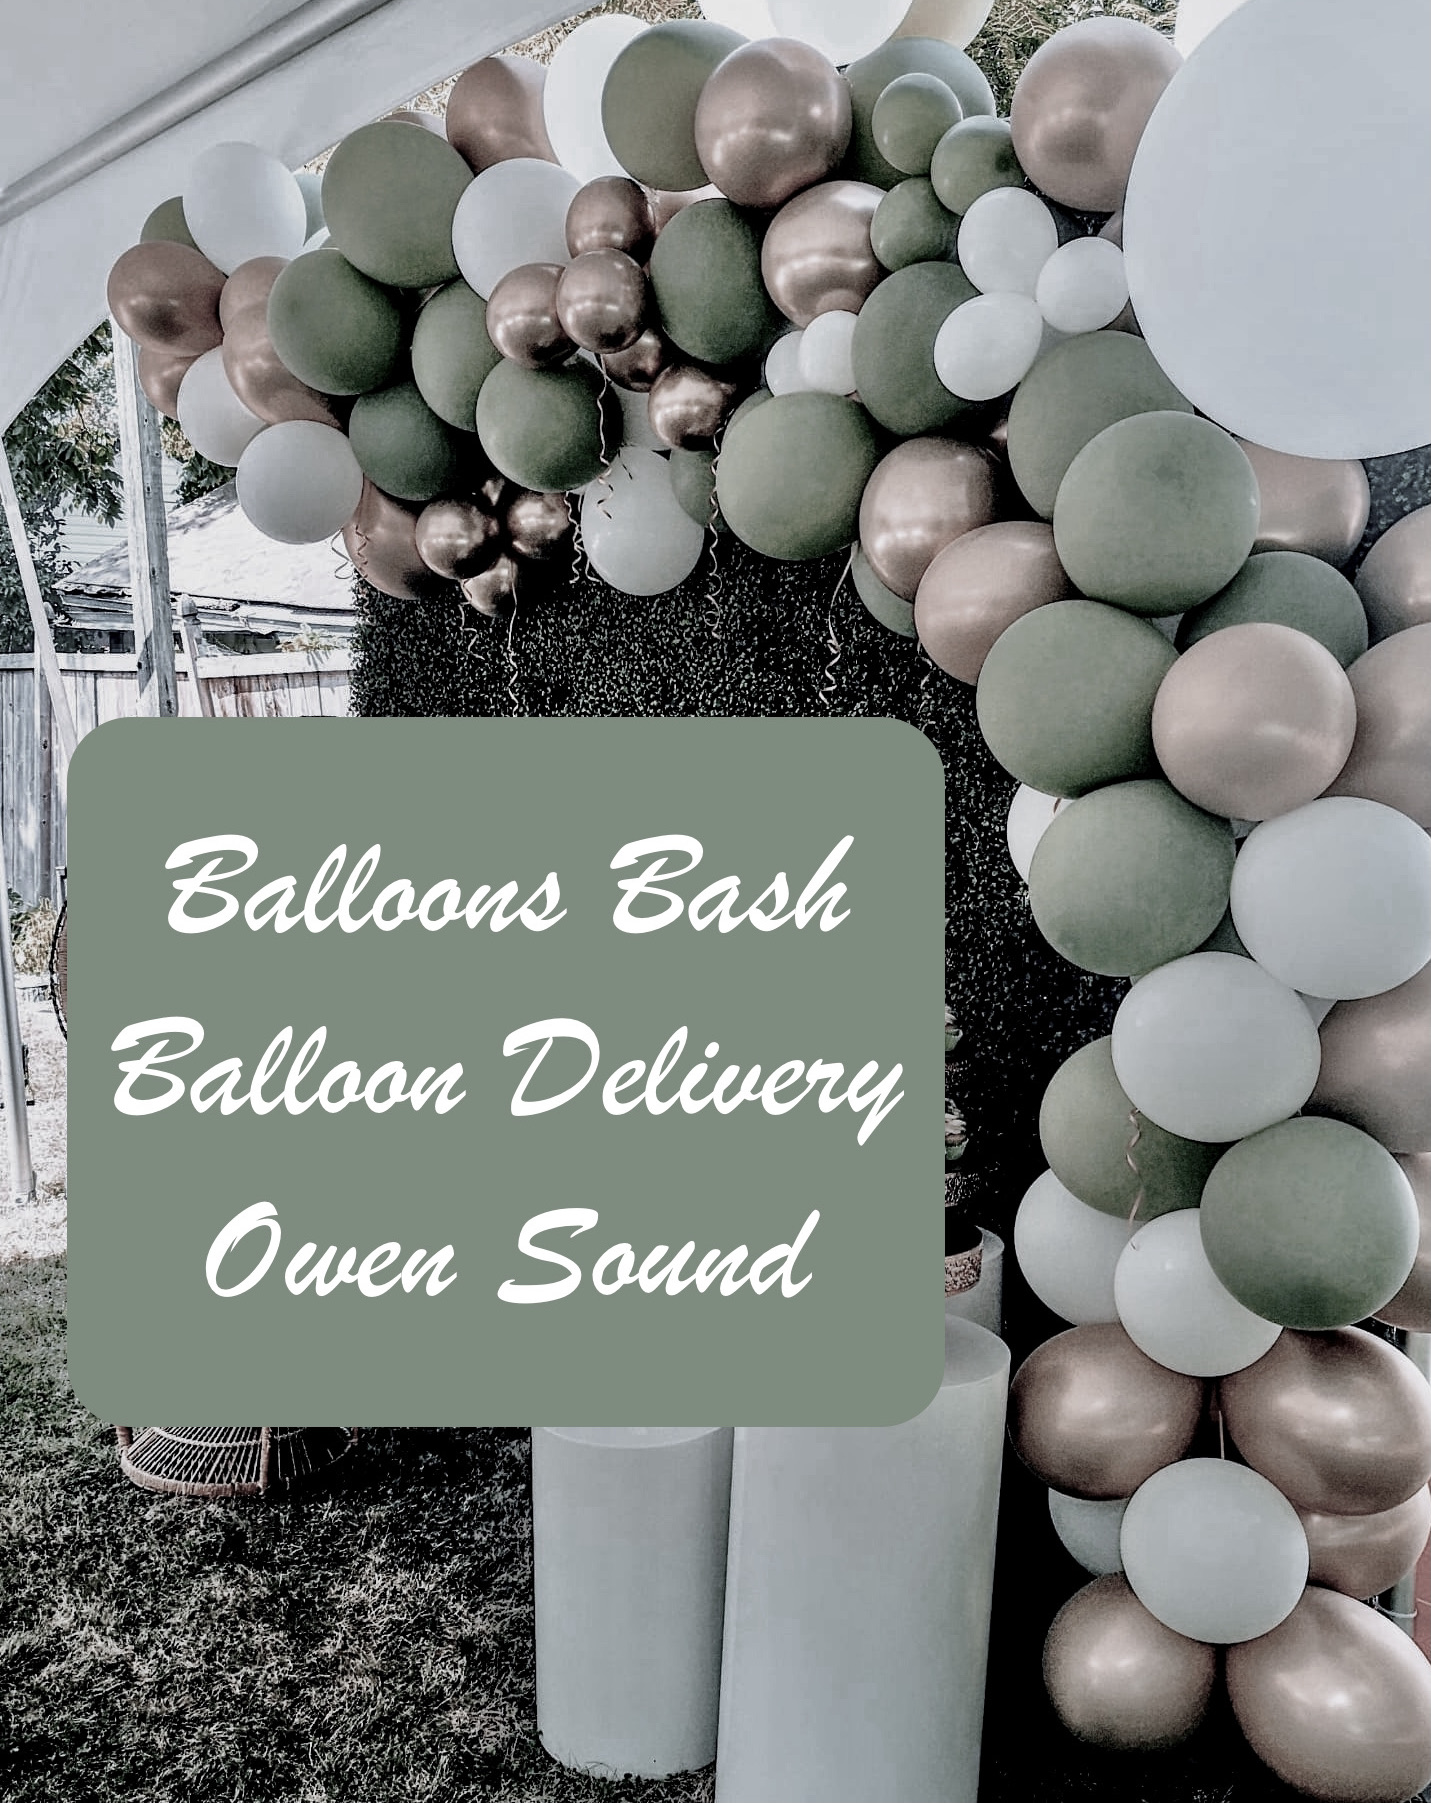 balloons bash owen sound